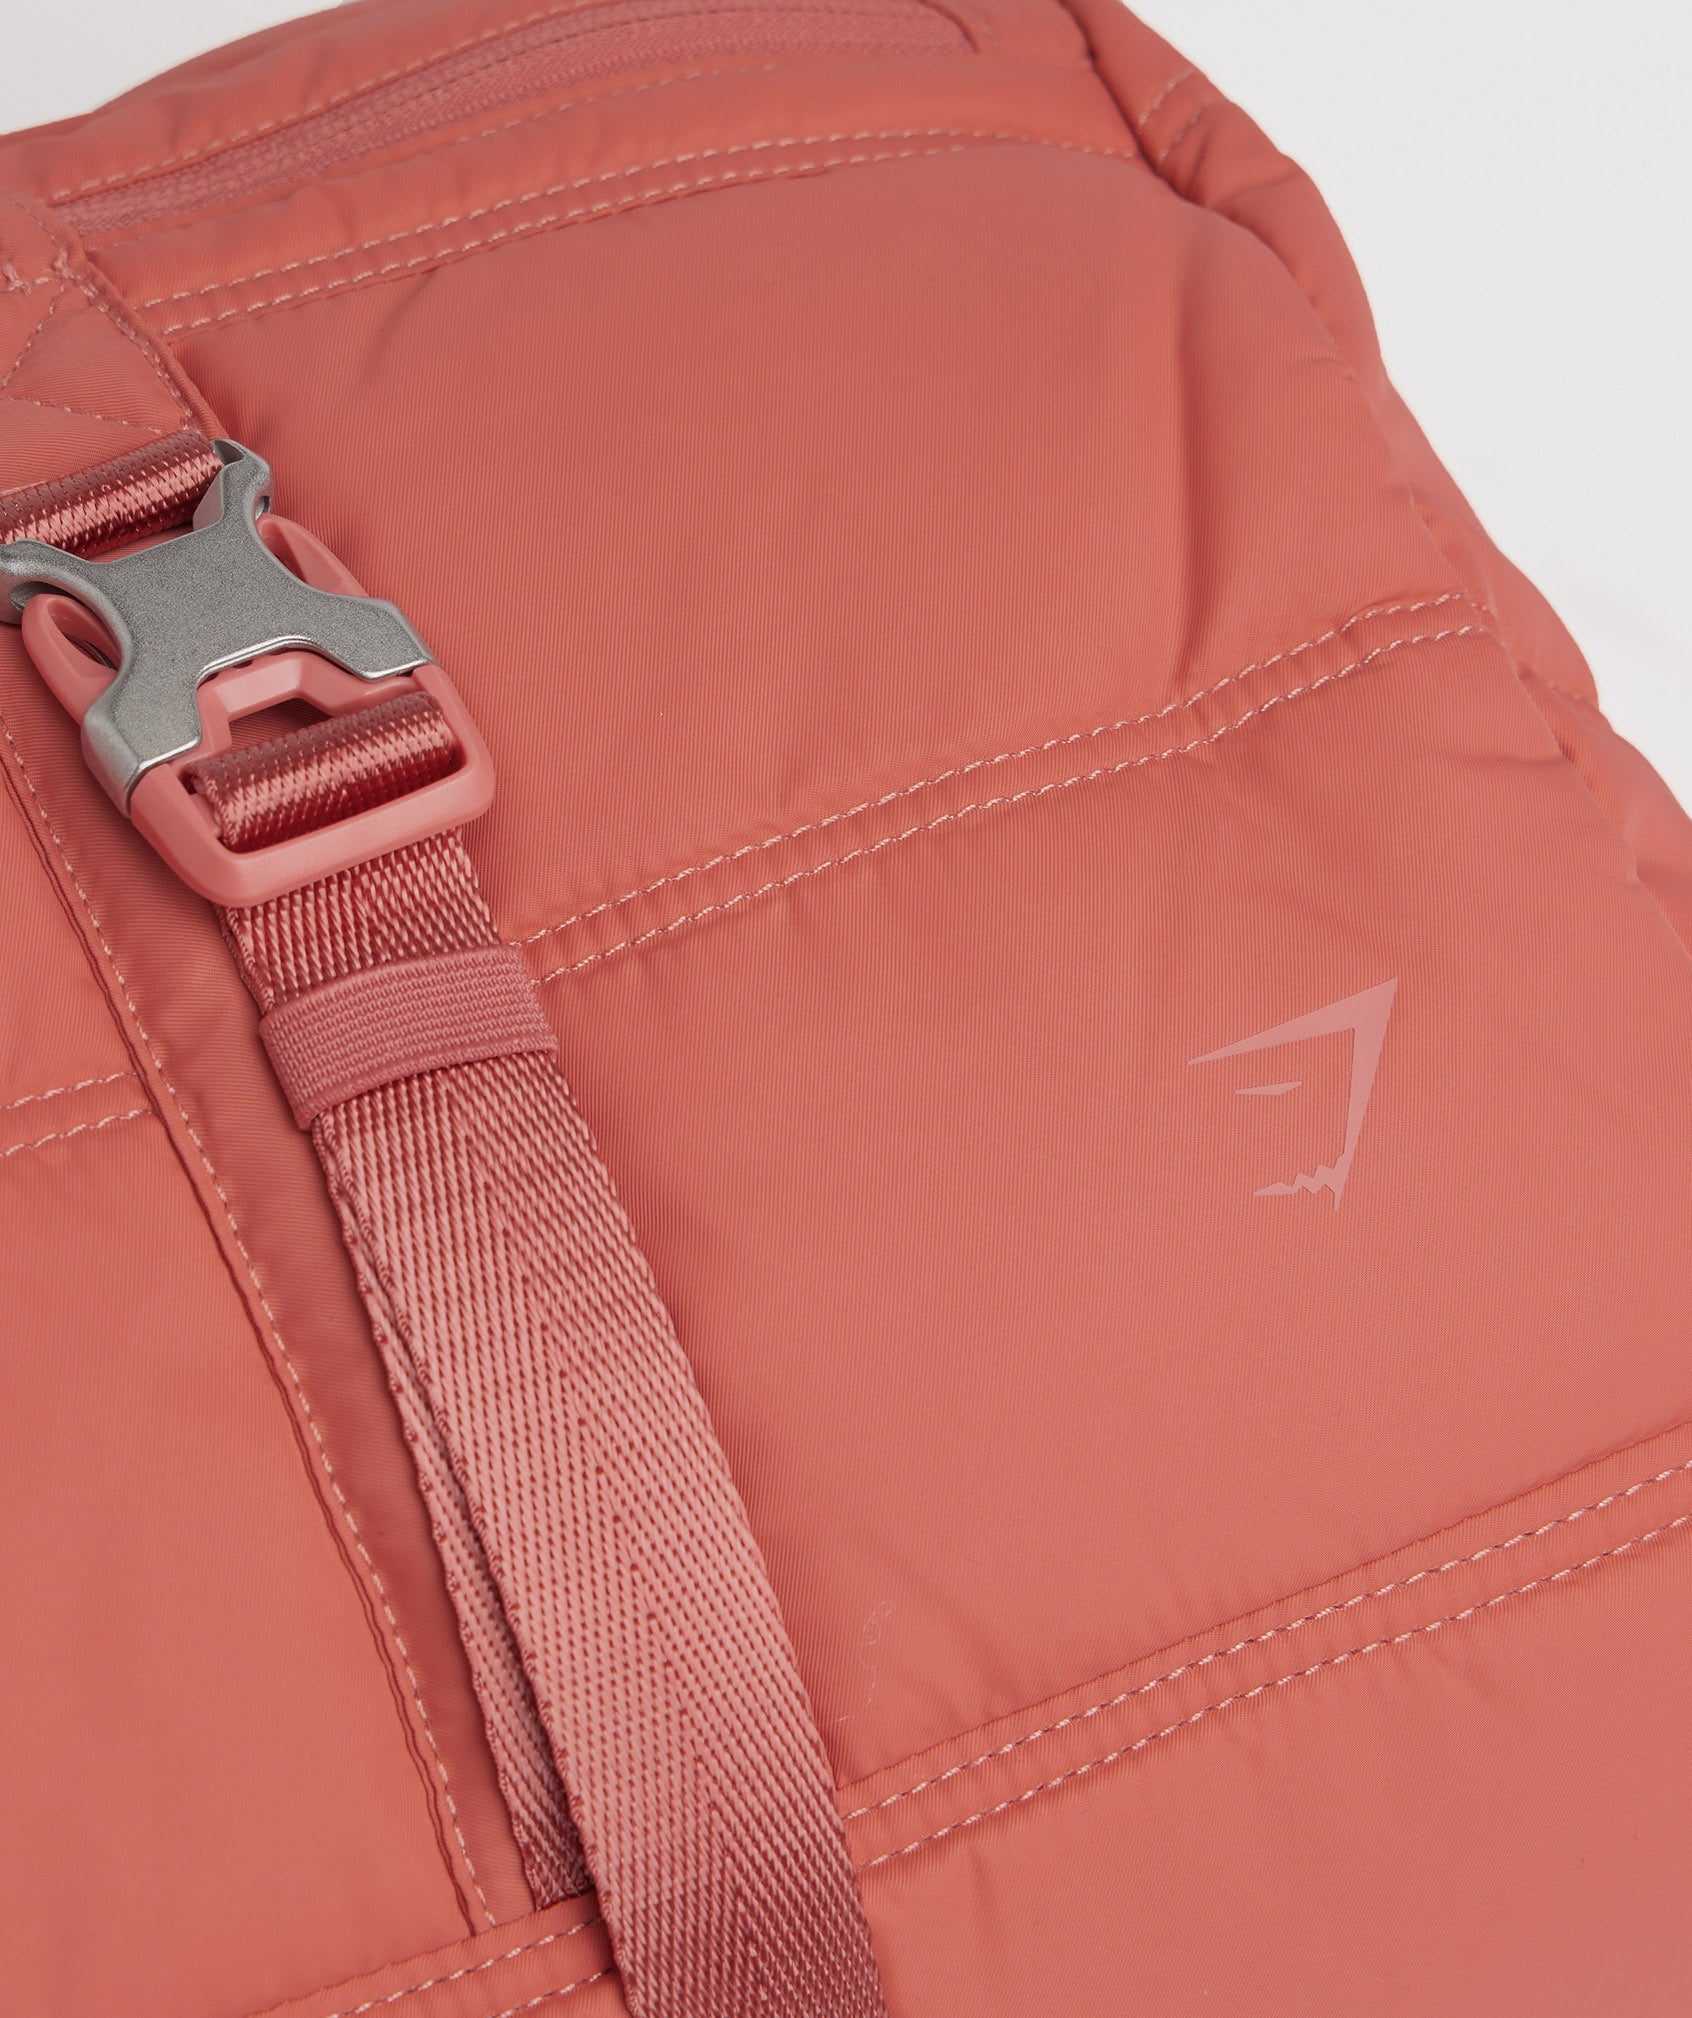 Premium Lifestyle Barrel Bag in Terracotta Pink - view 3